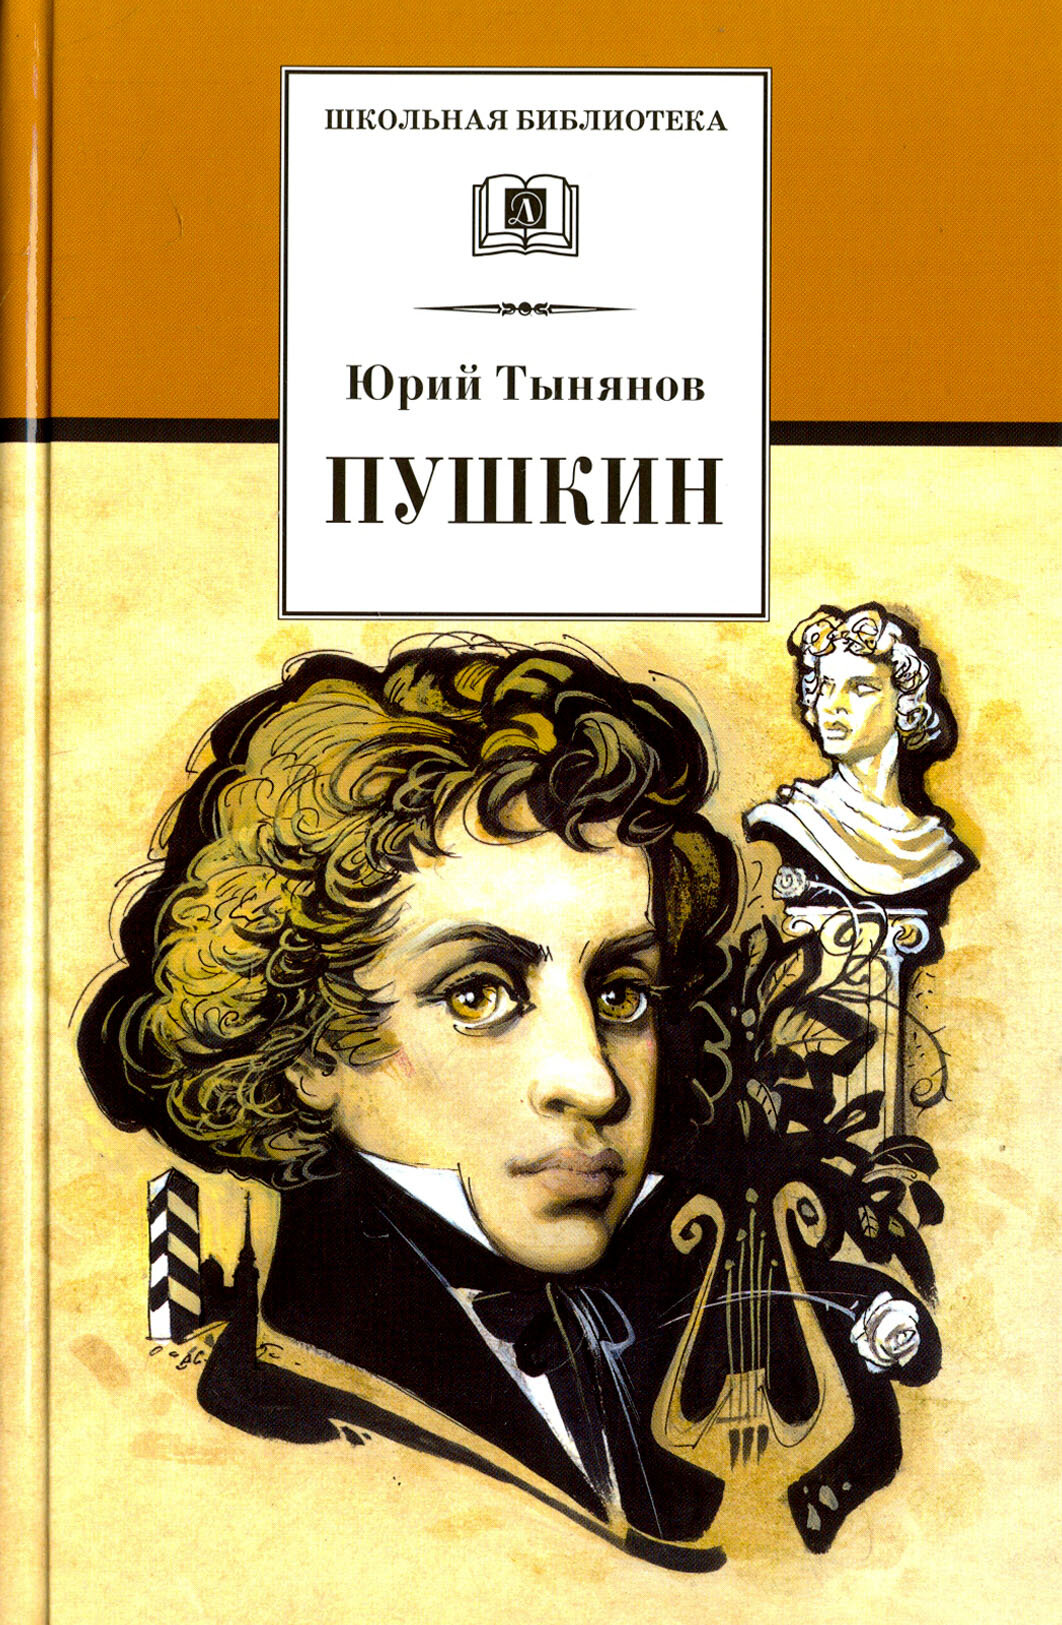 Пушкин (Тынянов Юрий Николаевич) - фото №2